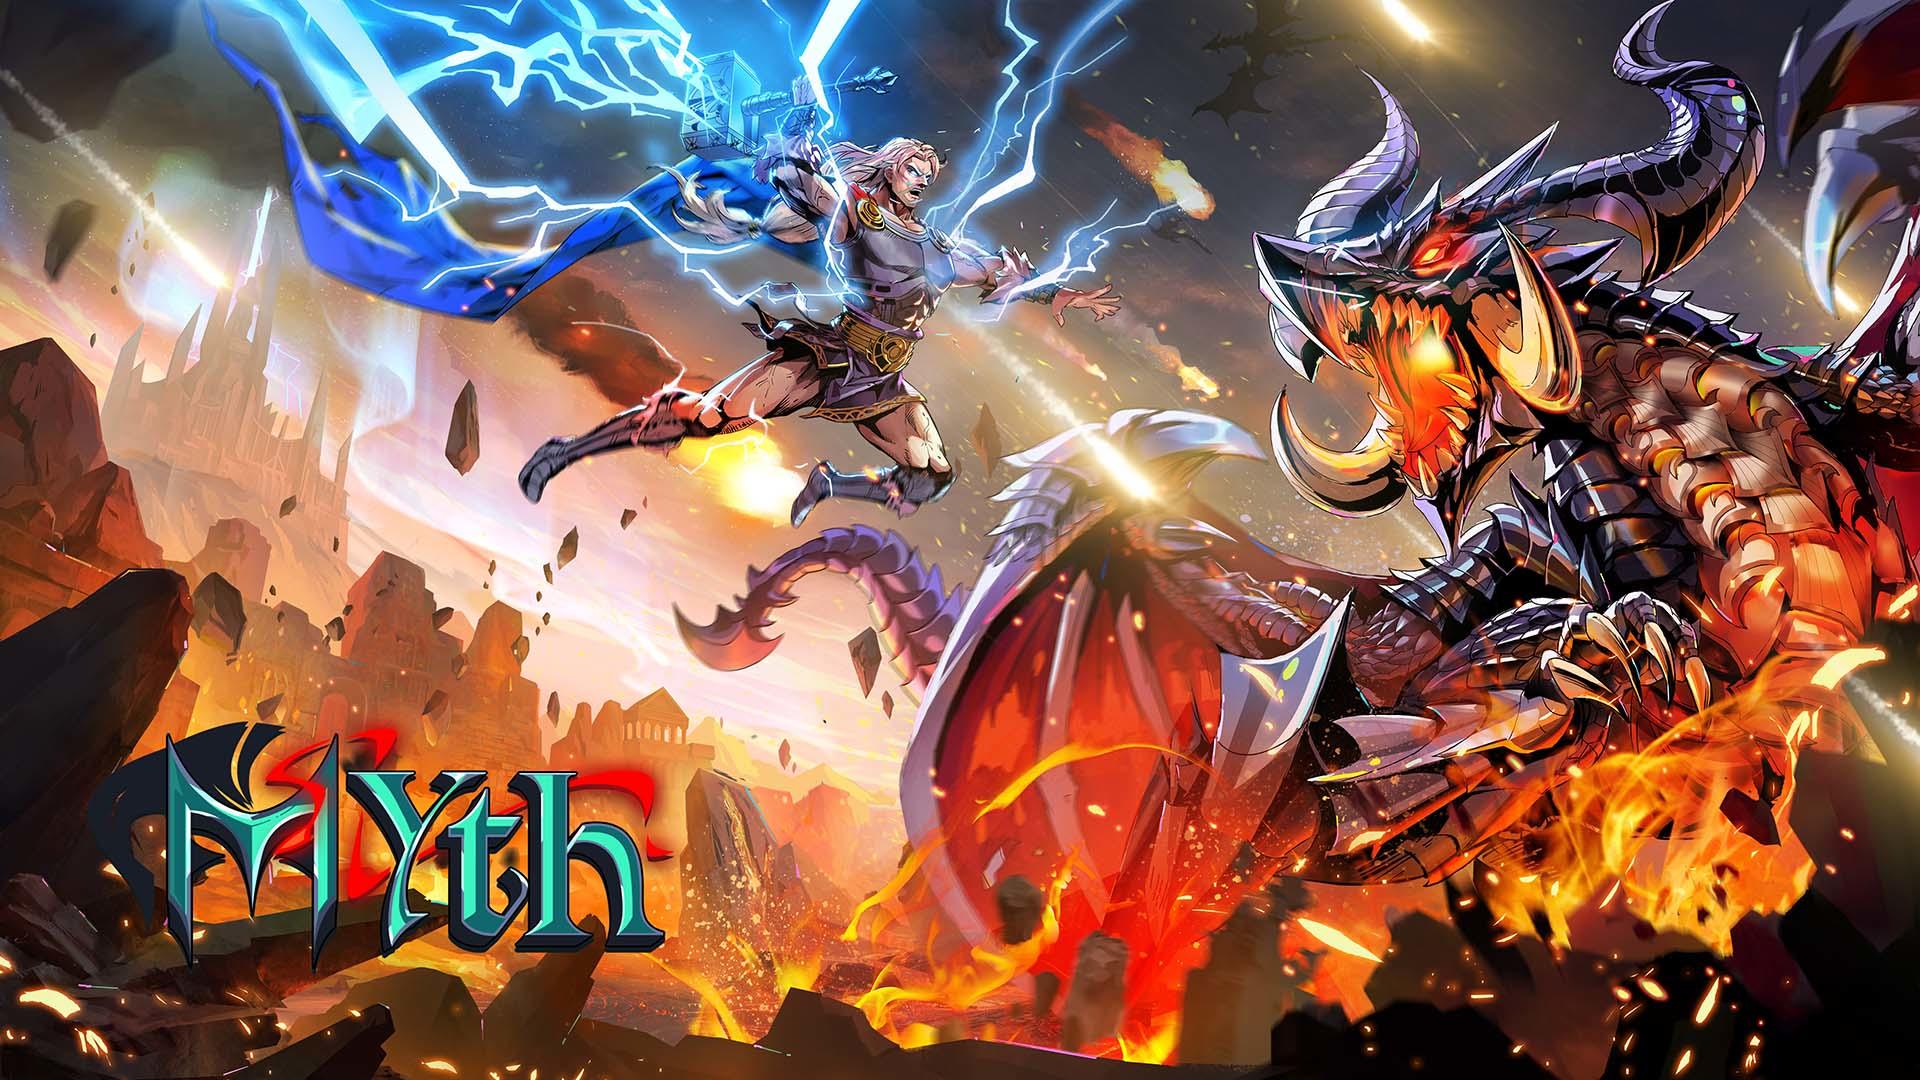 Myth: God of Asgard Android Gameplay (HADES Mobile Version???!) 